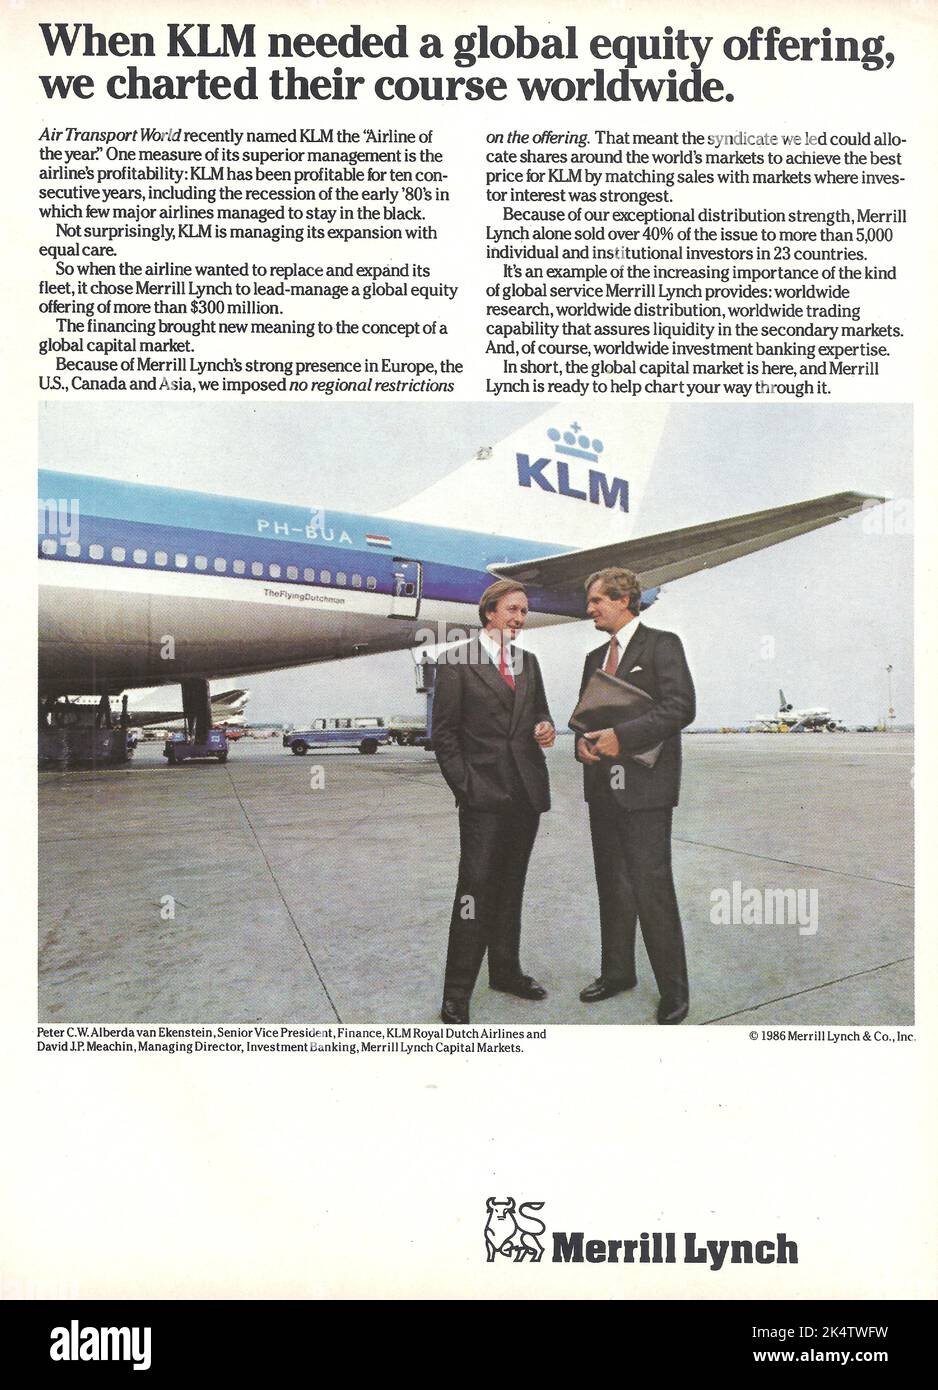 KLM bank financial institution advertisement bank magazine advert 1980s 1970s Stock Photo